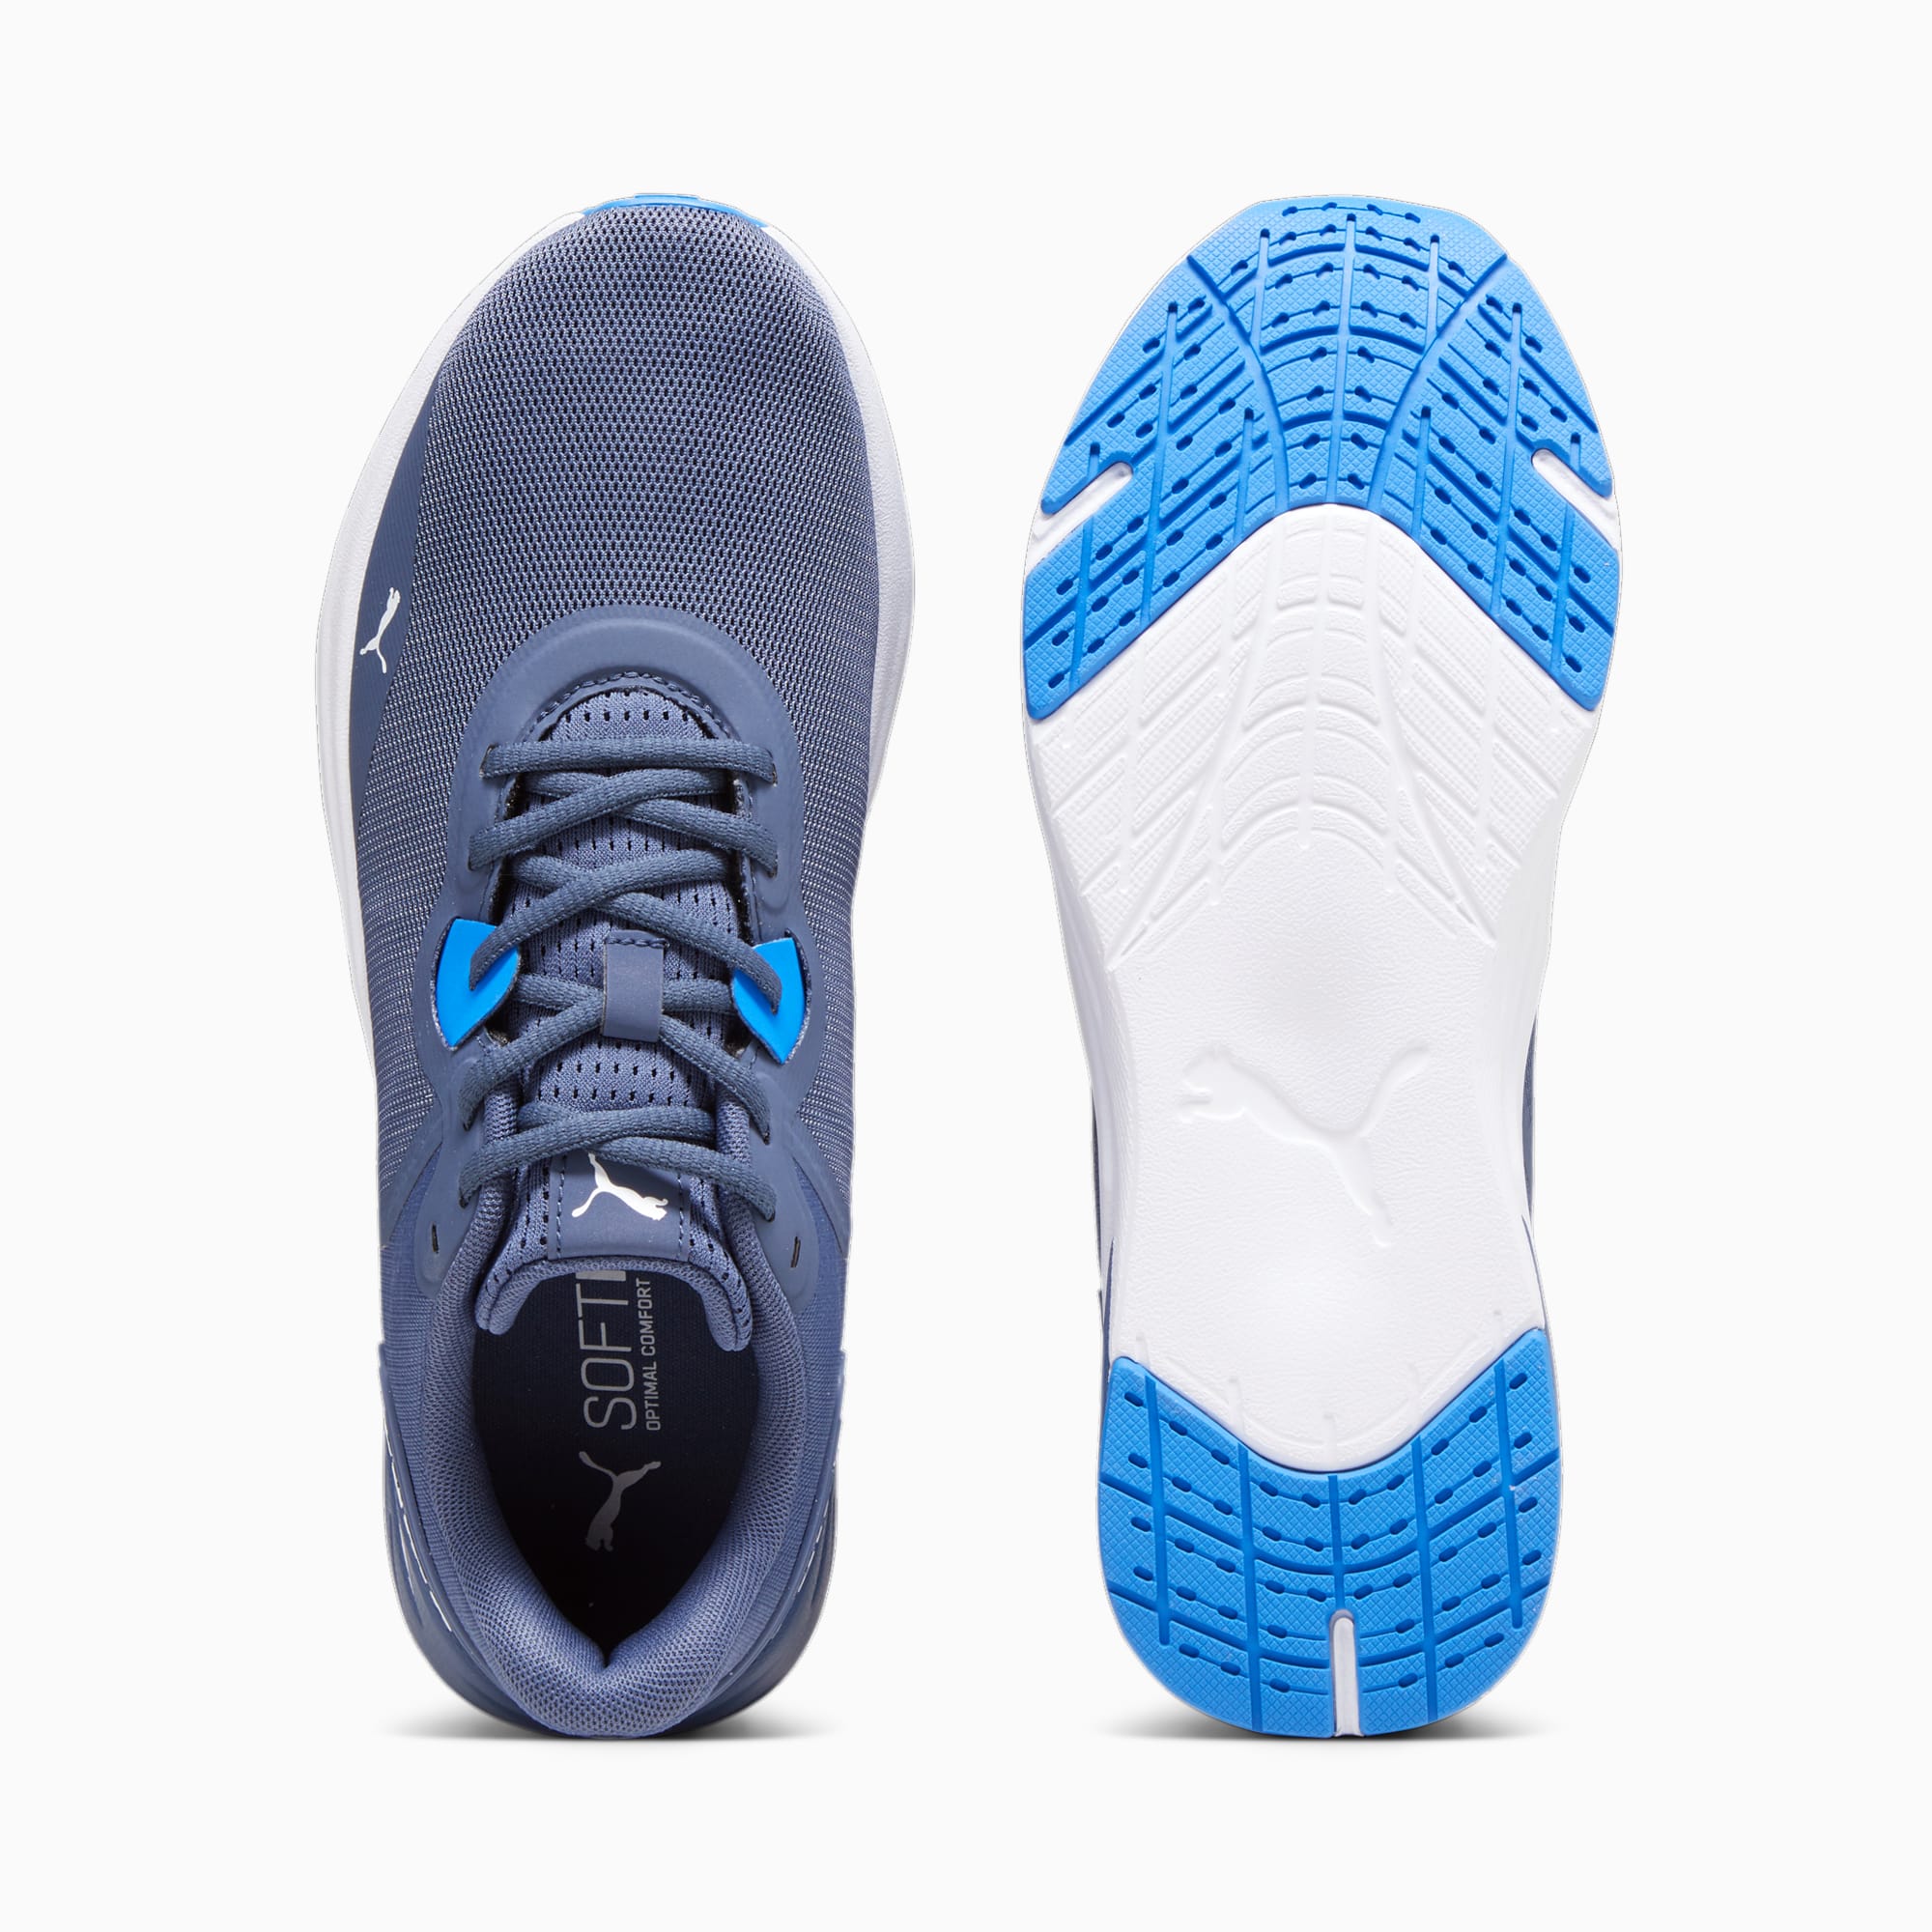 Women's PUMA Disperse XT 3 Training Shoes, Inky Blue/White/Ultra Blue, Size 40,5, Shoes